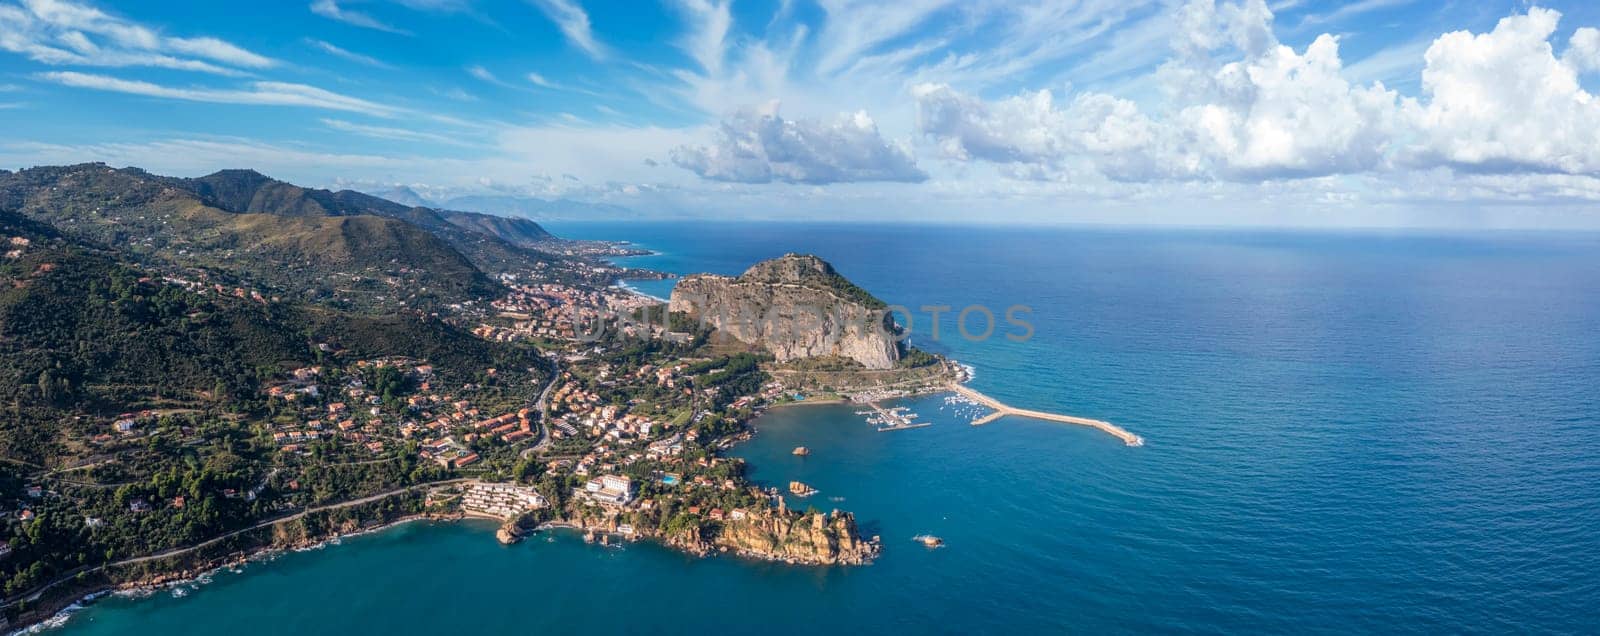 Aerial view of a coastline near Cefalu medieval village of Sicily island, Italy